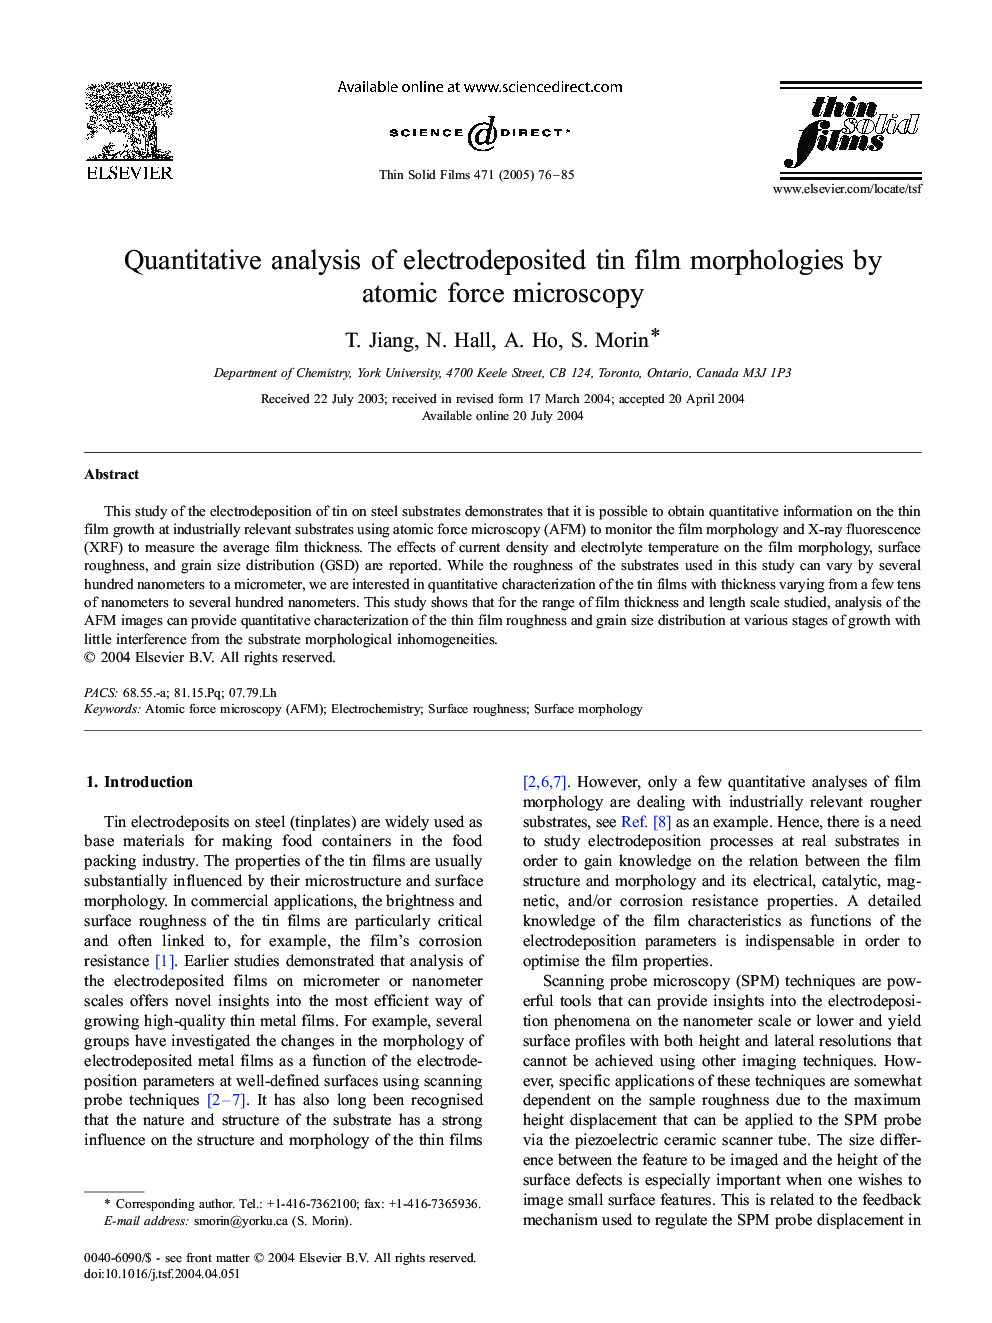 Quantitative analysis of electrodeposited tin film morphologies by atomic force microscopy